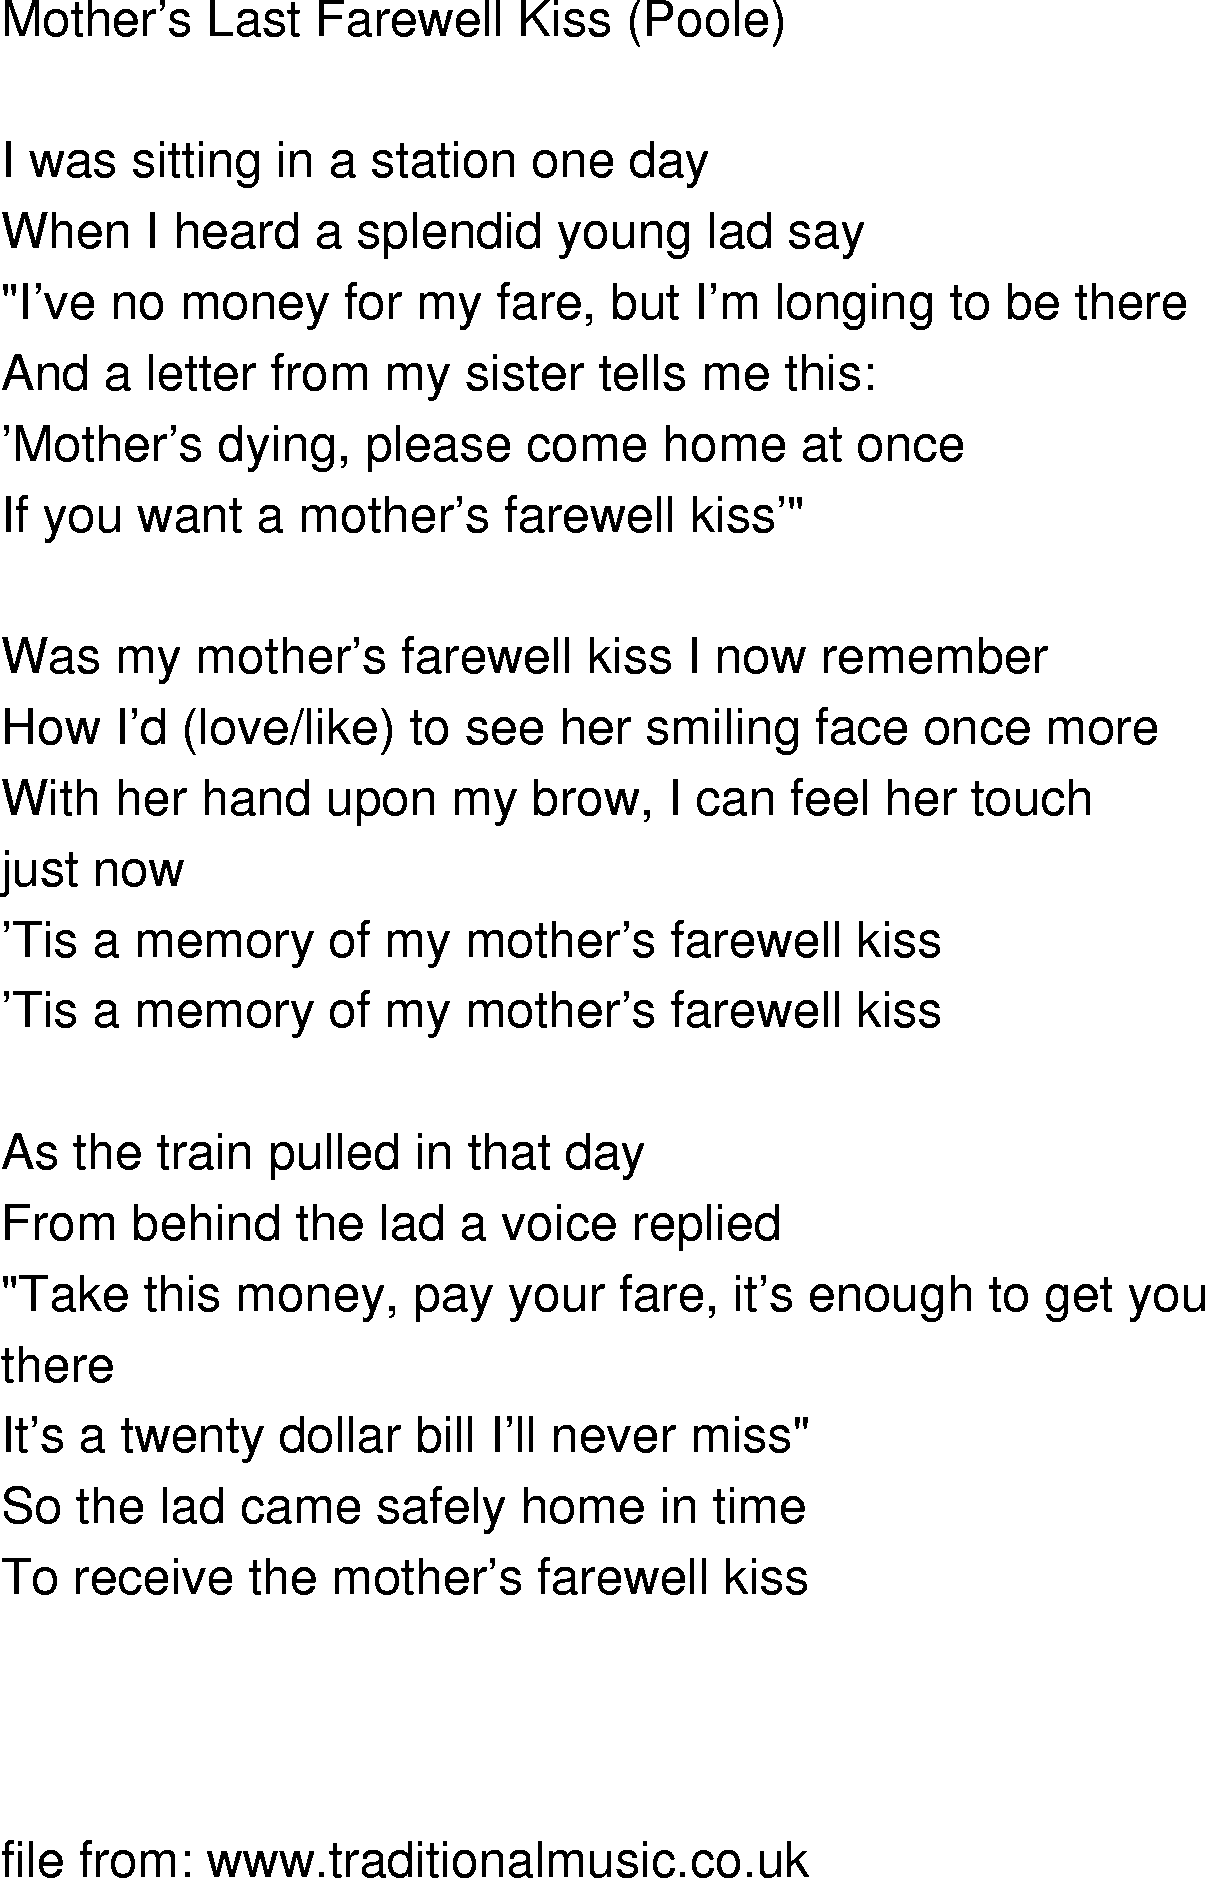 Old-Time (oldtimey) Song Lyrics - mothers last farewell kiss